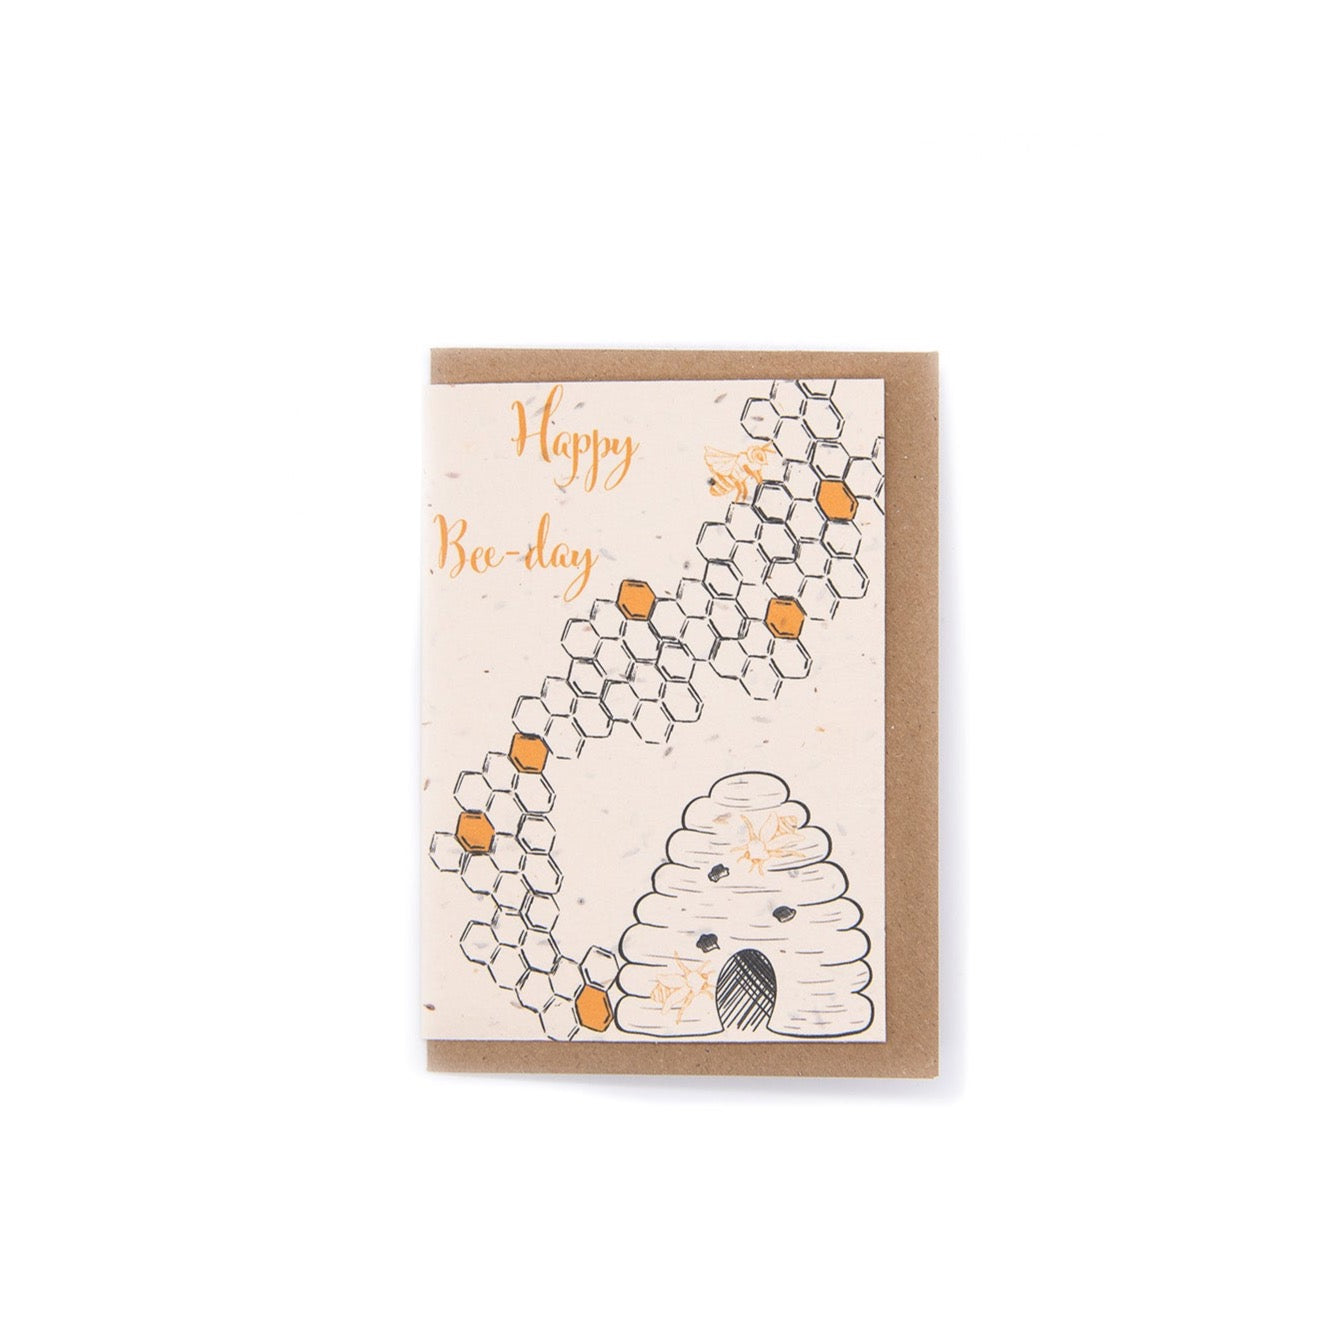 Happy Bee-Day Birthday card